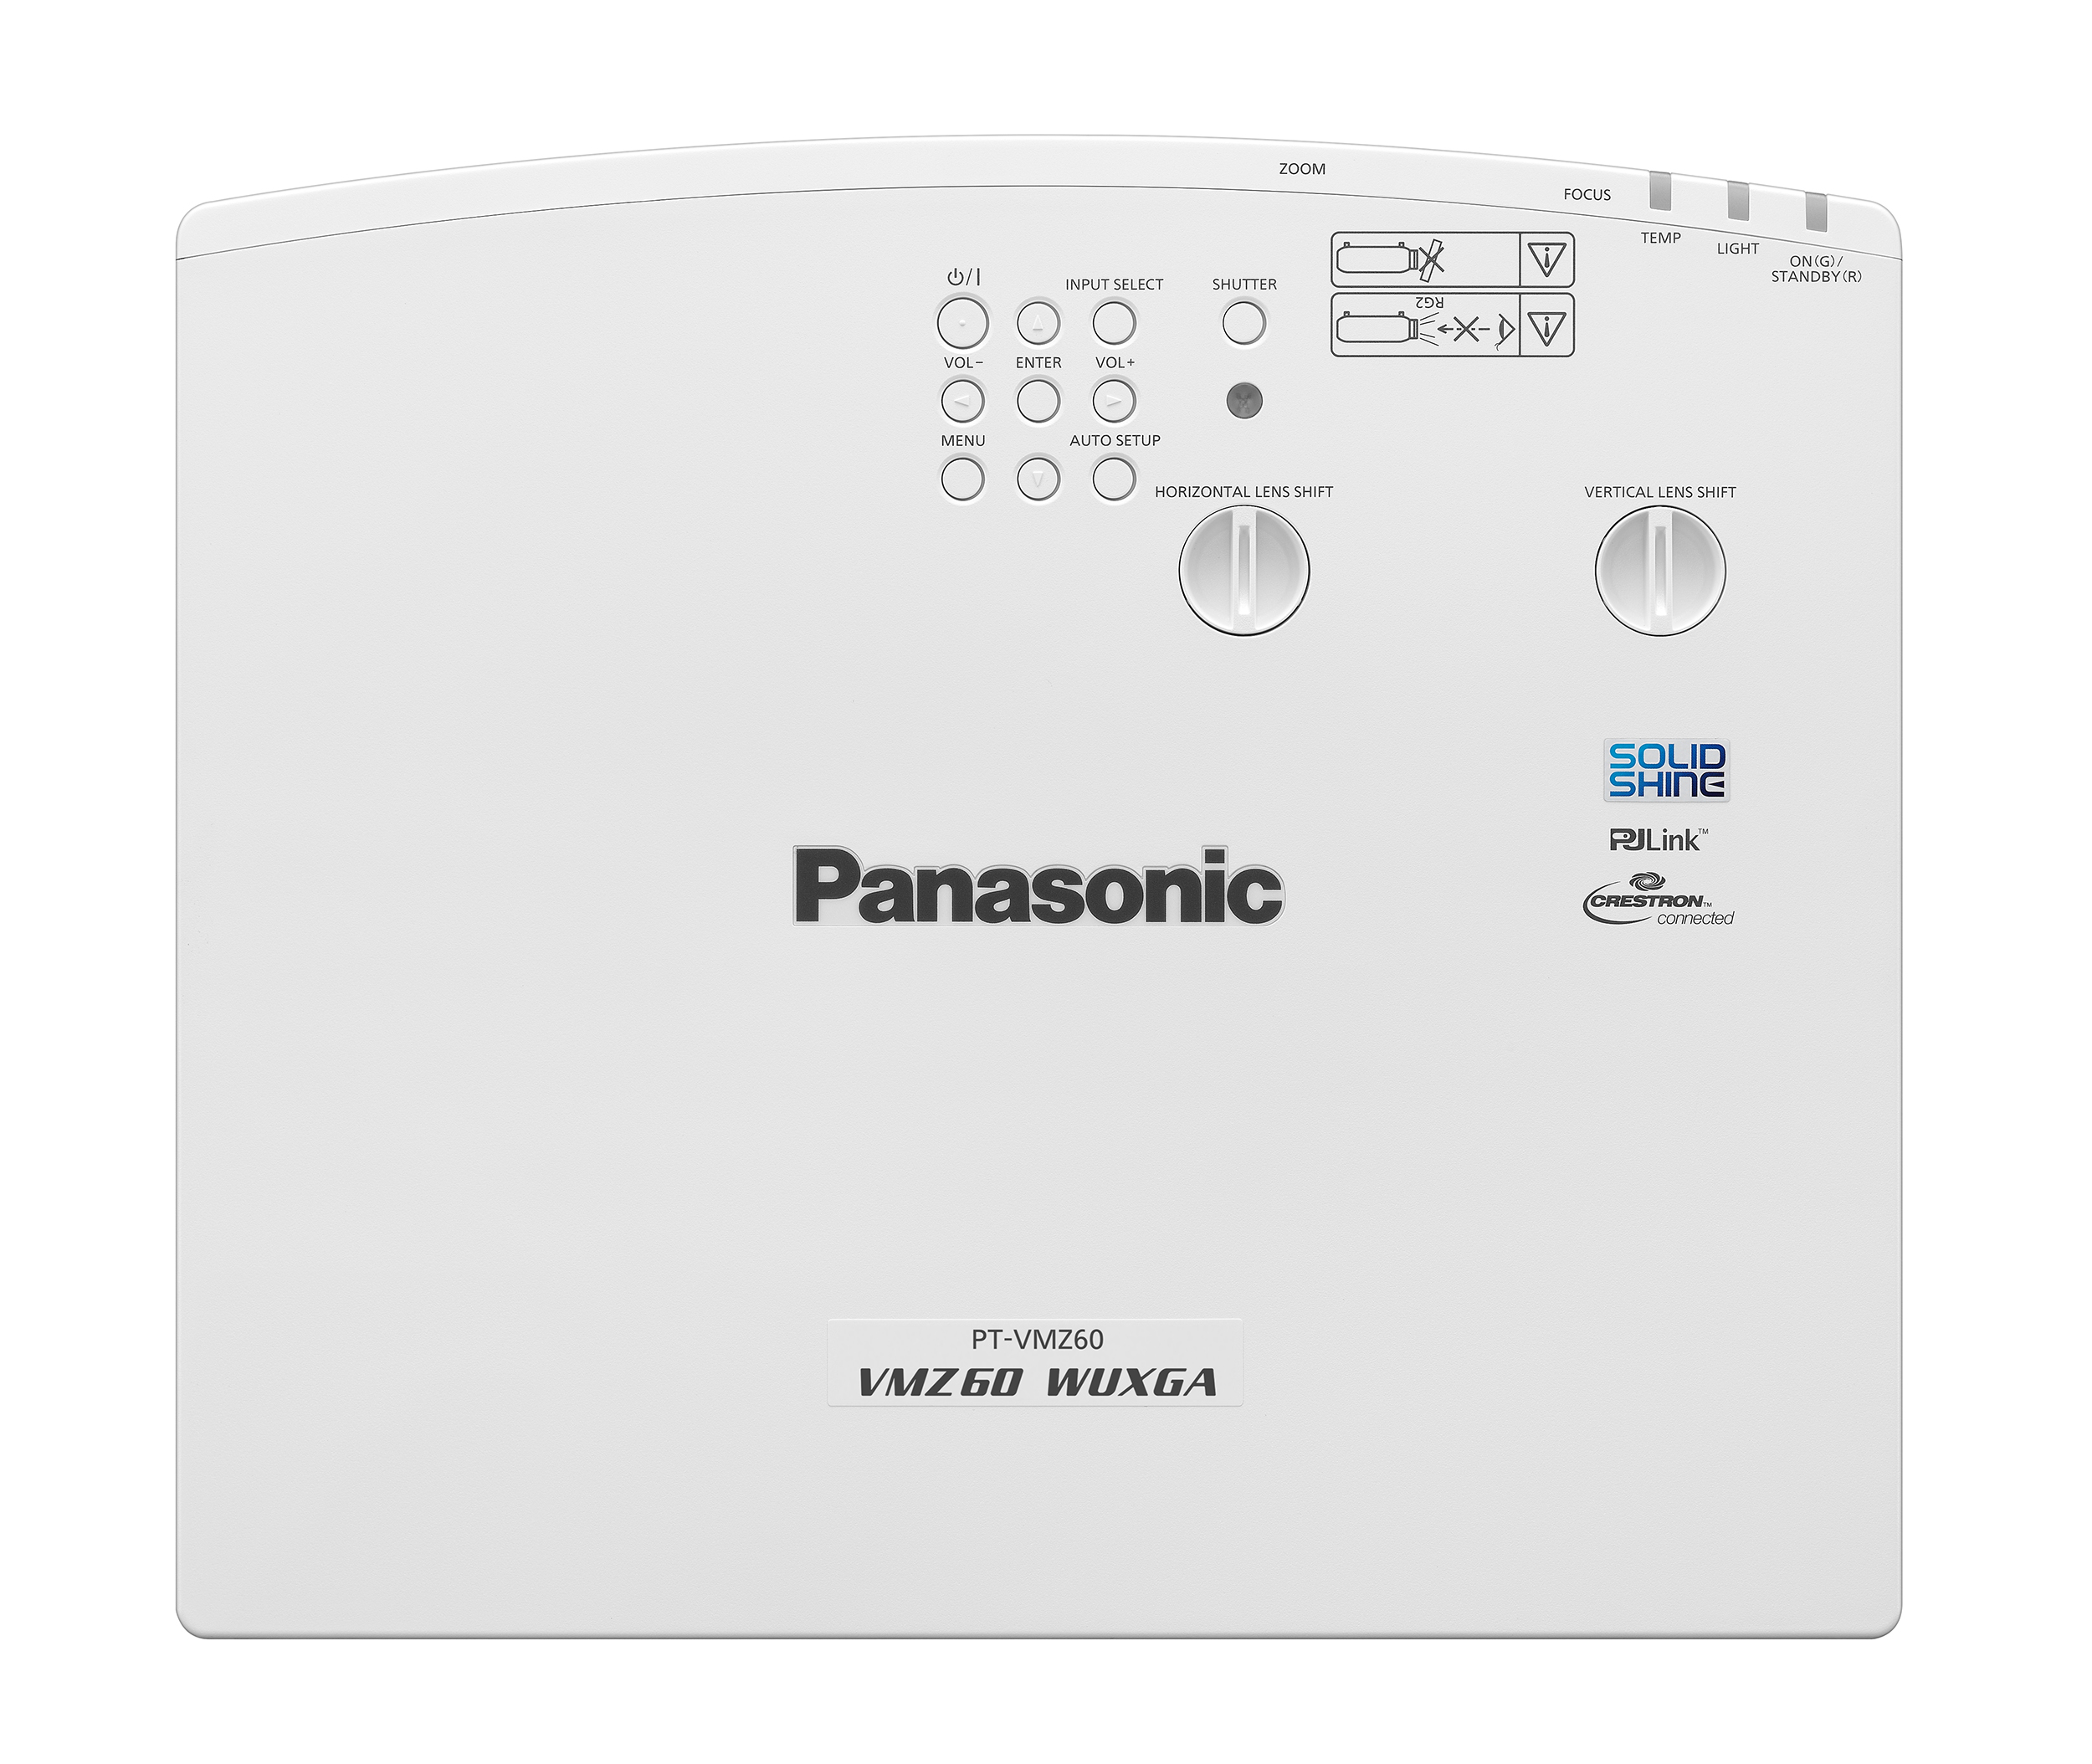 PT-VMZ60 Series - Panasonic Projector Product Database - Panasonic 